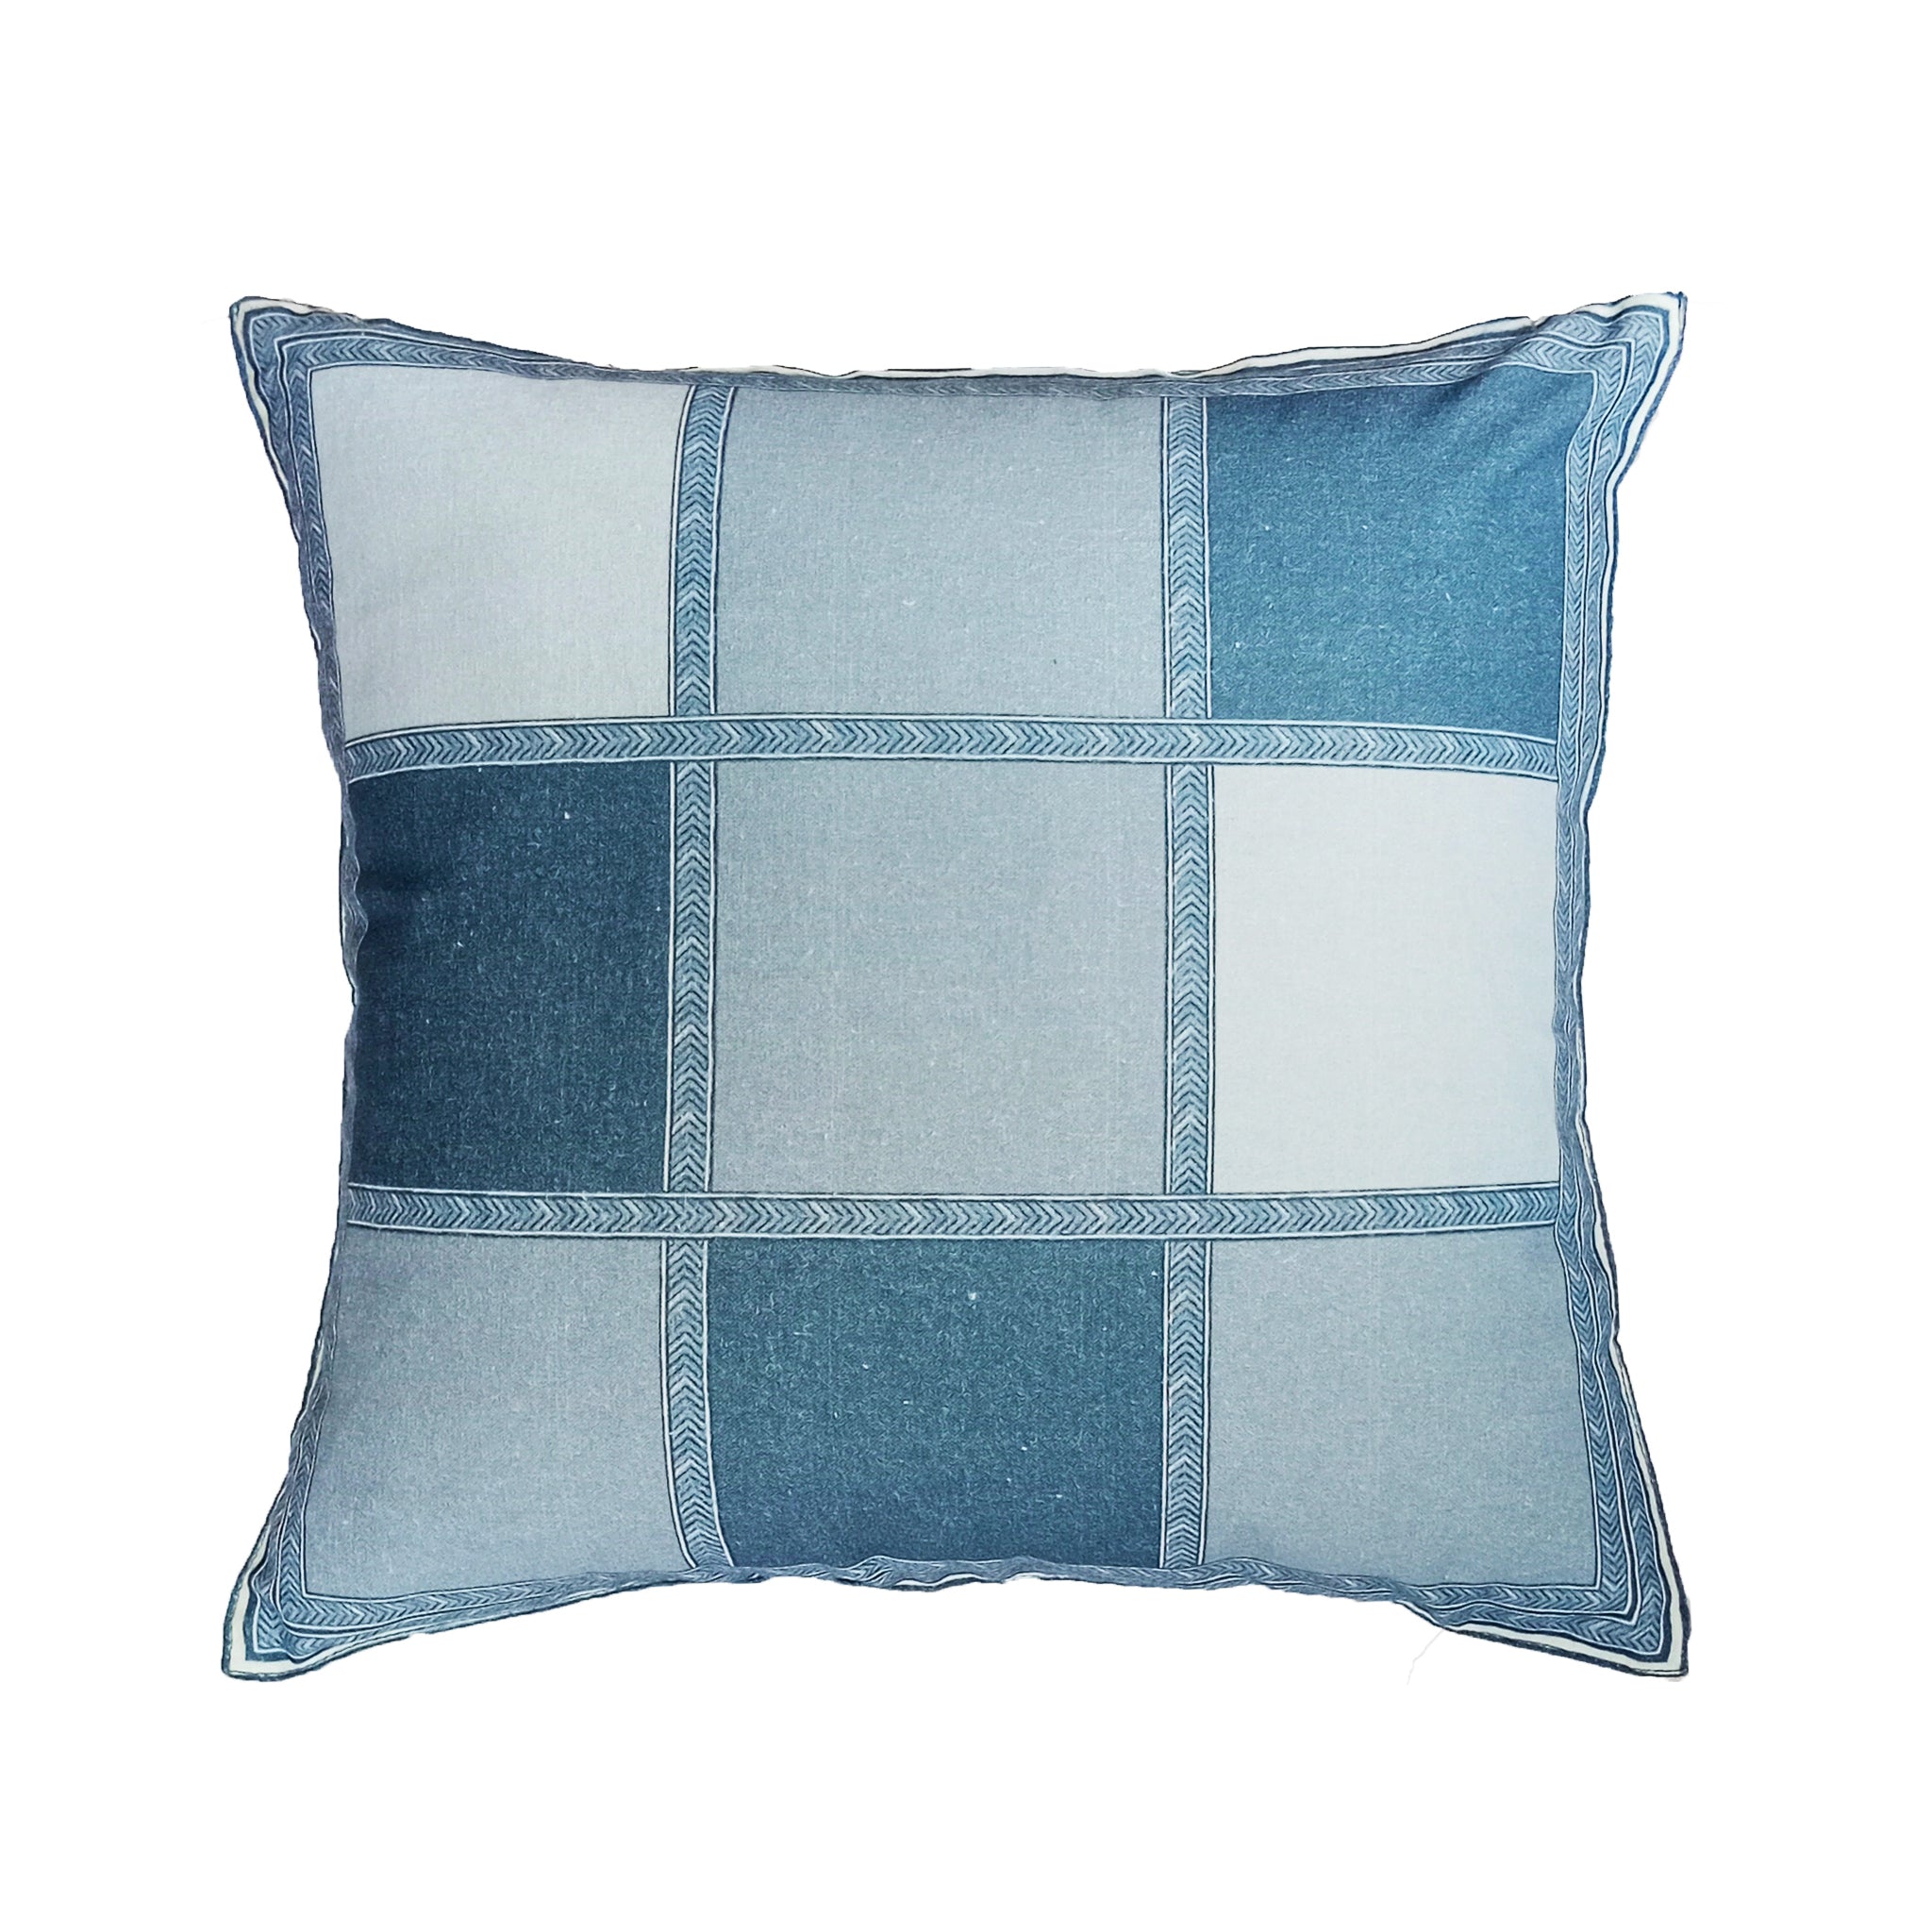 Cotton Cushion Cover - Patta and Salli Tempest Blue